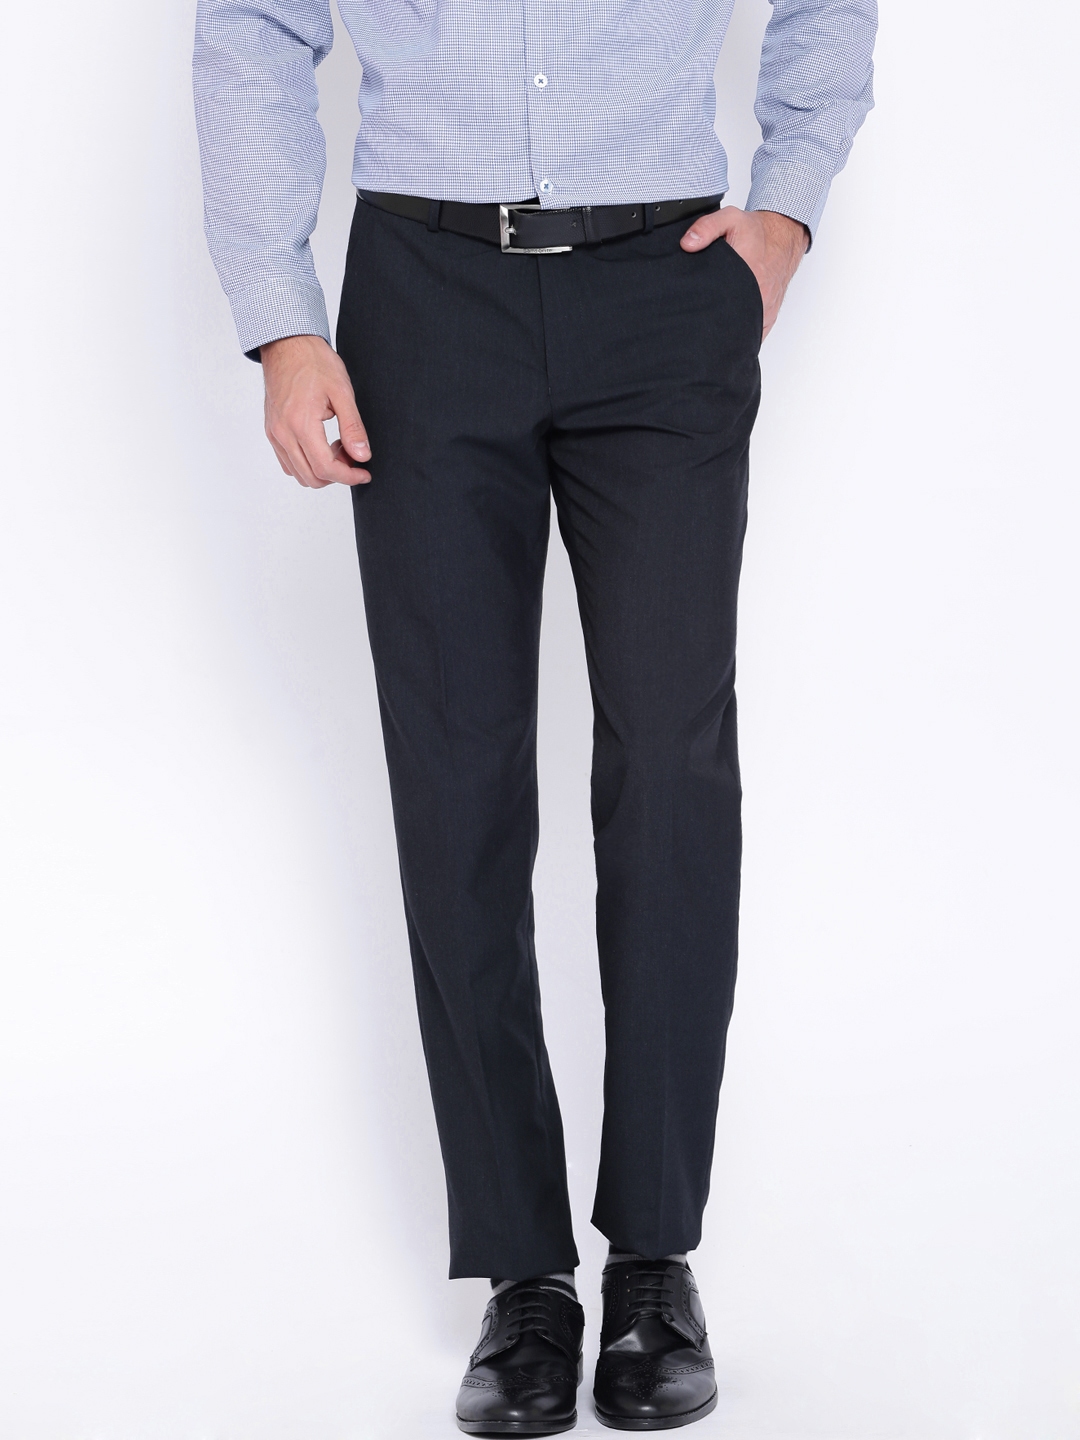 Buy Peter England Black Slim Fit Elasticated Trousers for Mens Online   Tata CLiQ